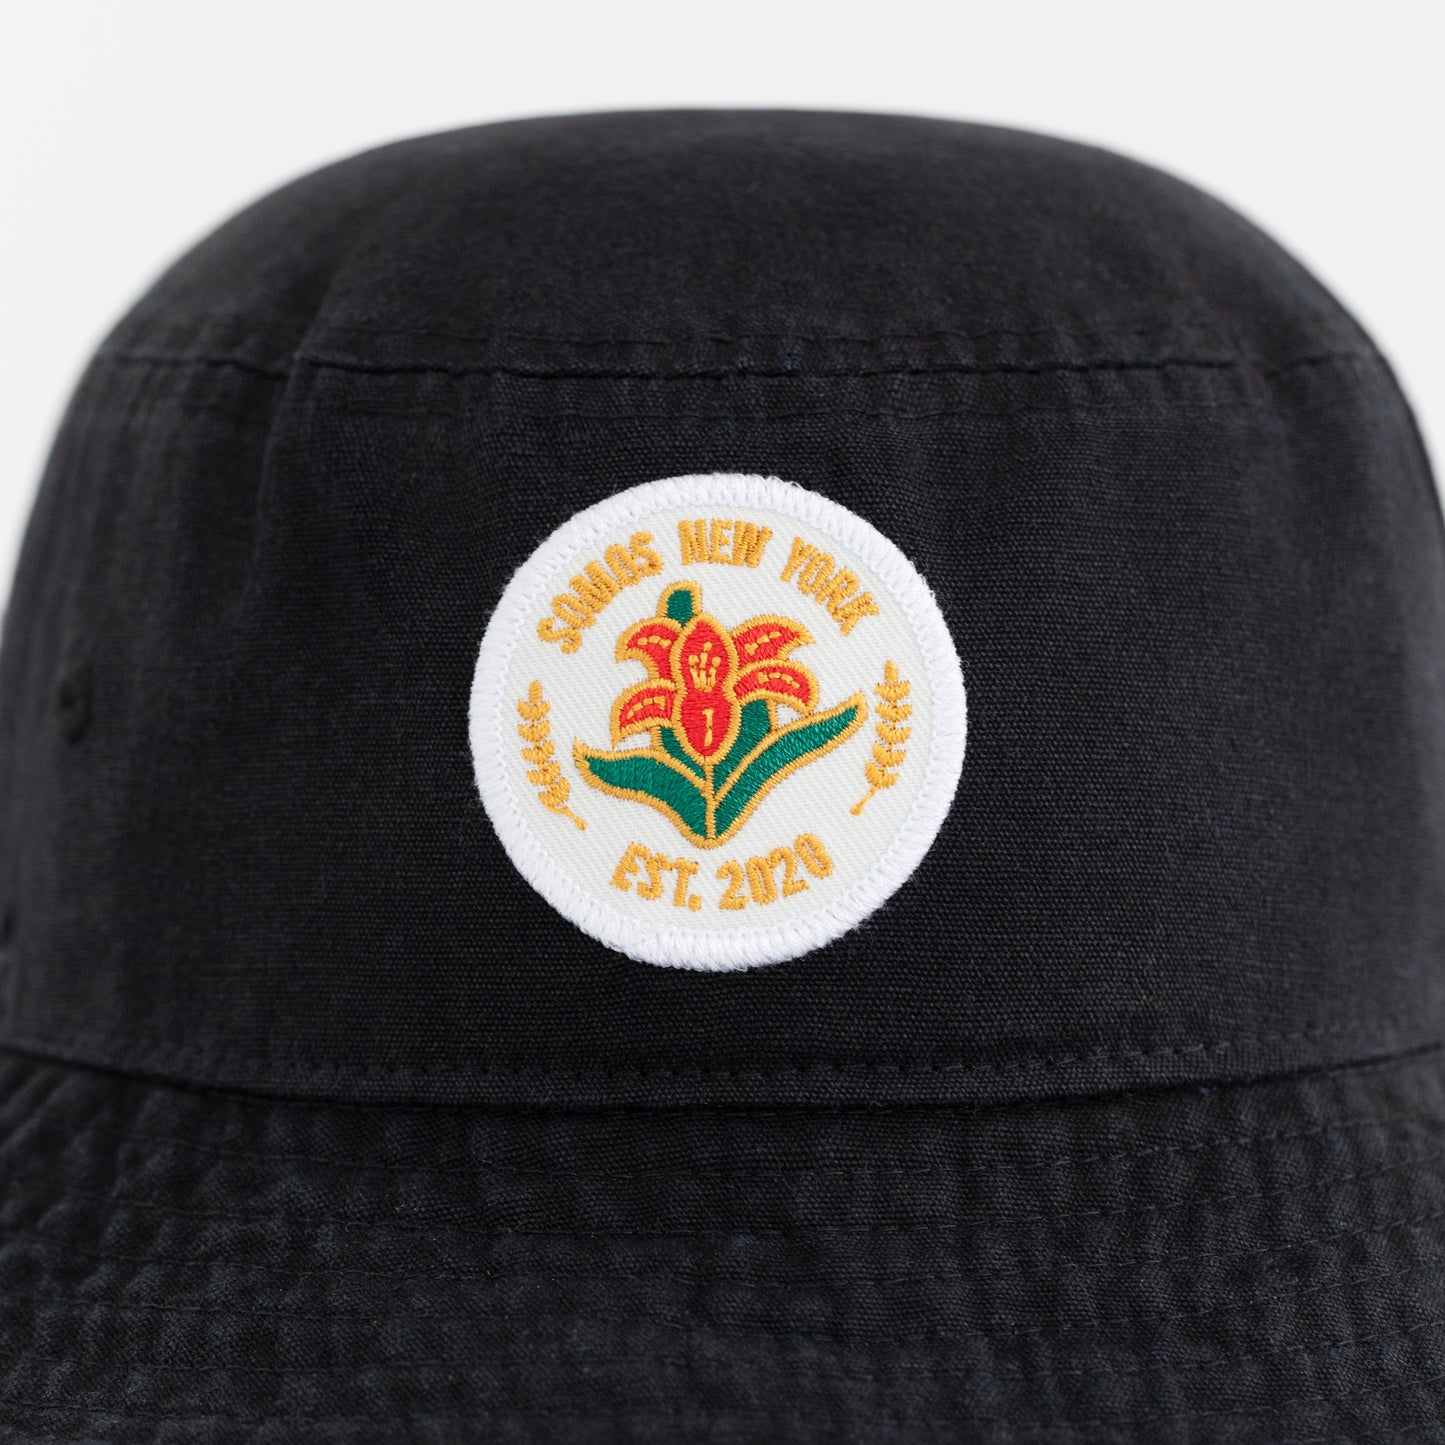 Flower Emblem Bucket Hat - Black